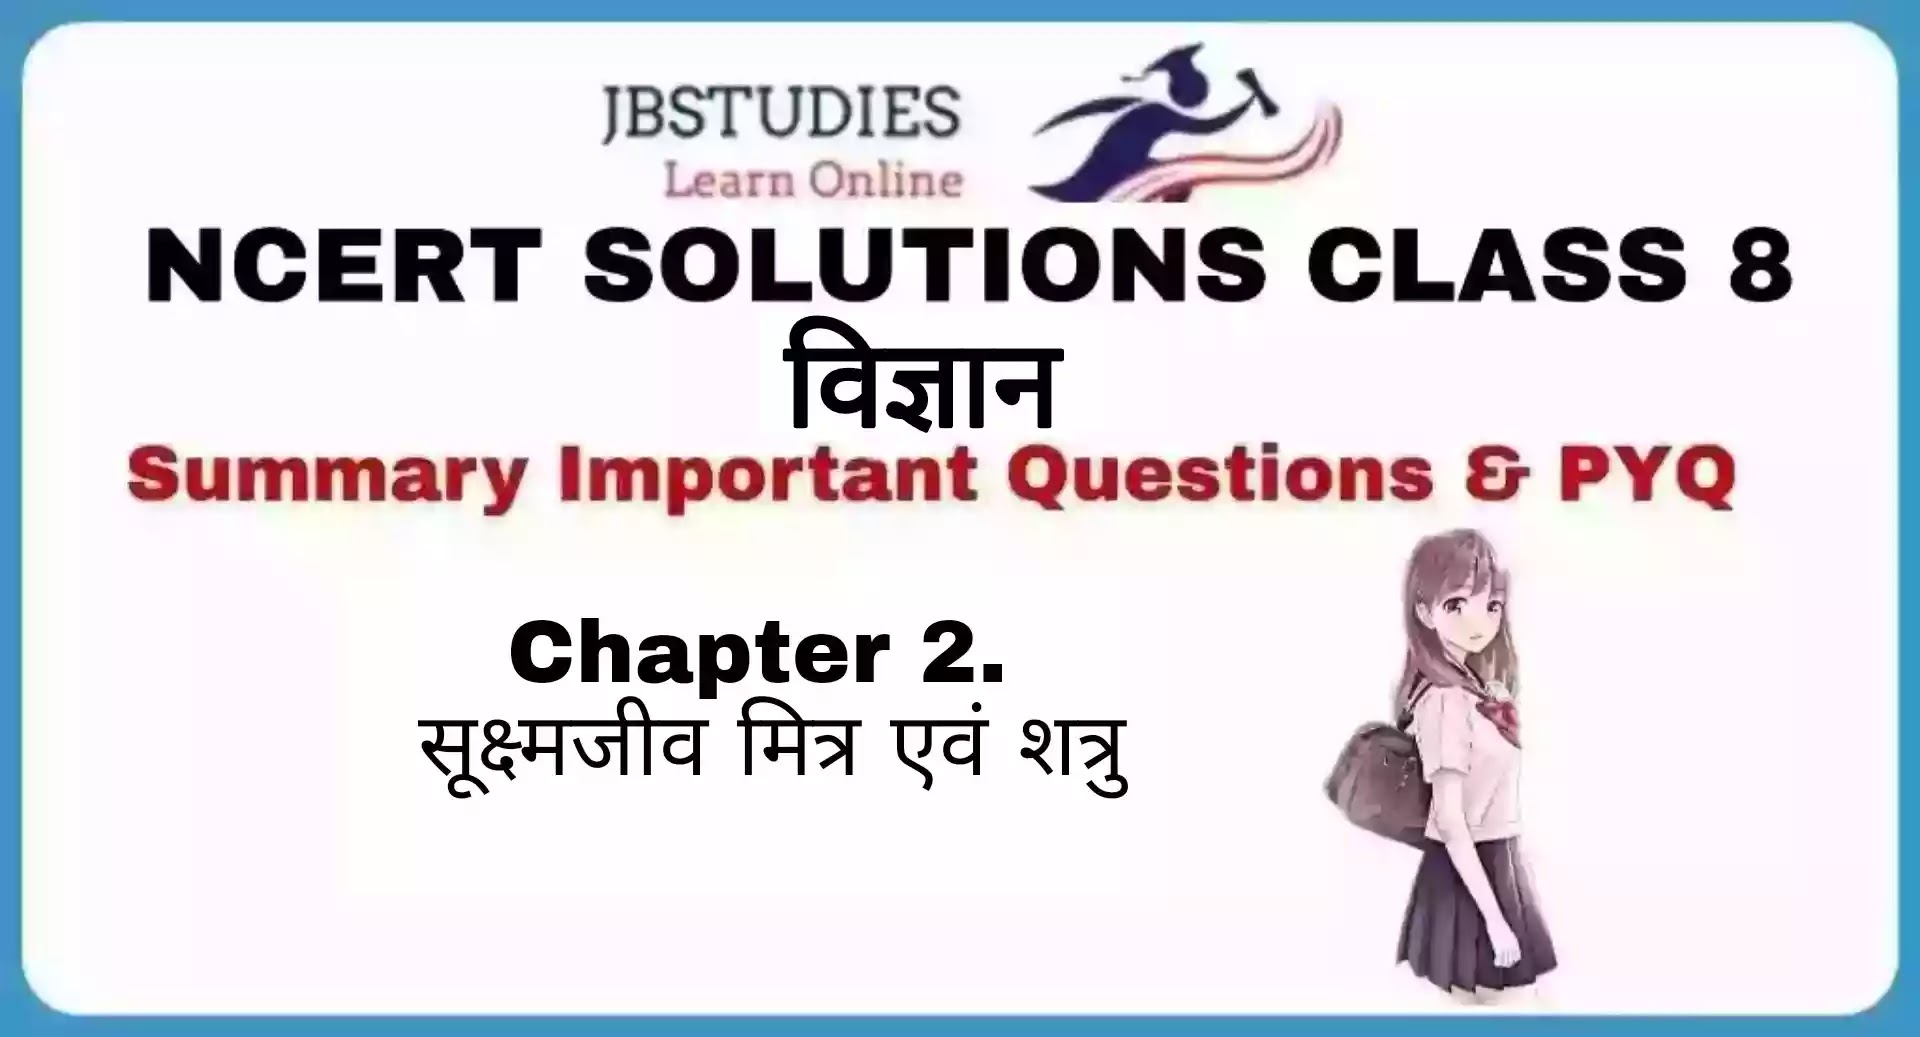 Solutions Class 8 विज्ञान Chapter- 2 (सूक्ष्मजीव: मित्र एवं शत्रु)